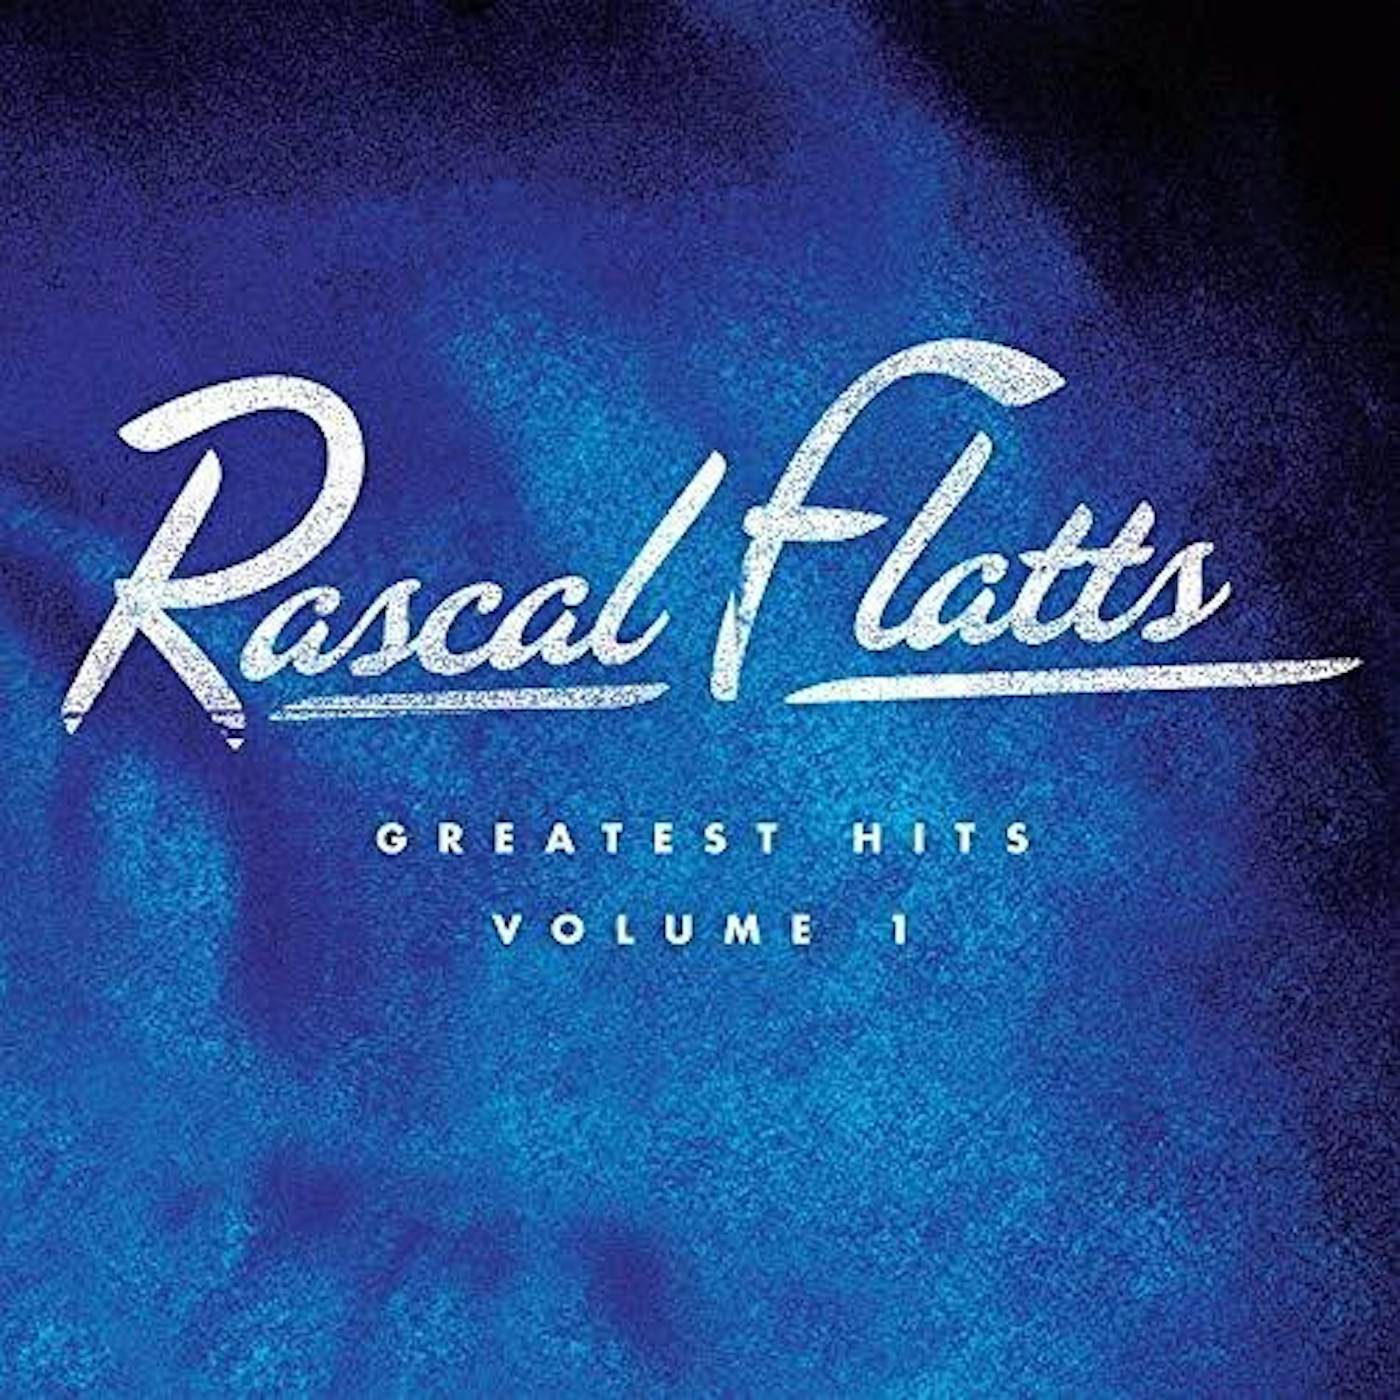 Rascal Flatts Greatest Hits Volume 1 Vinyl Record